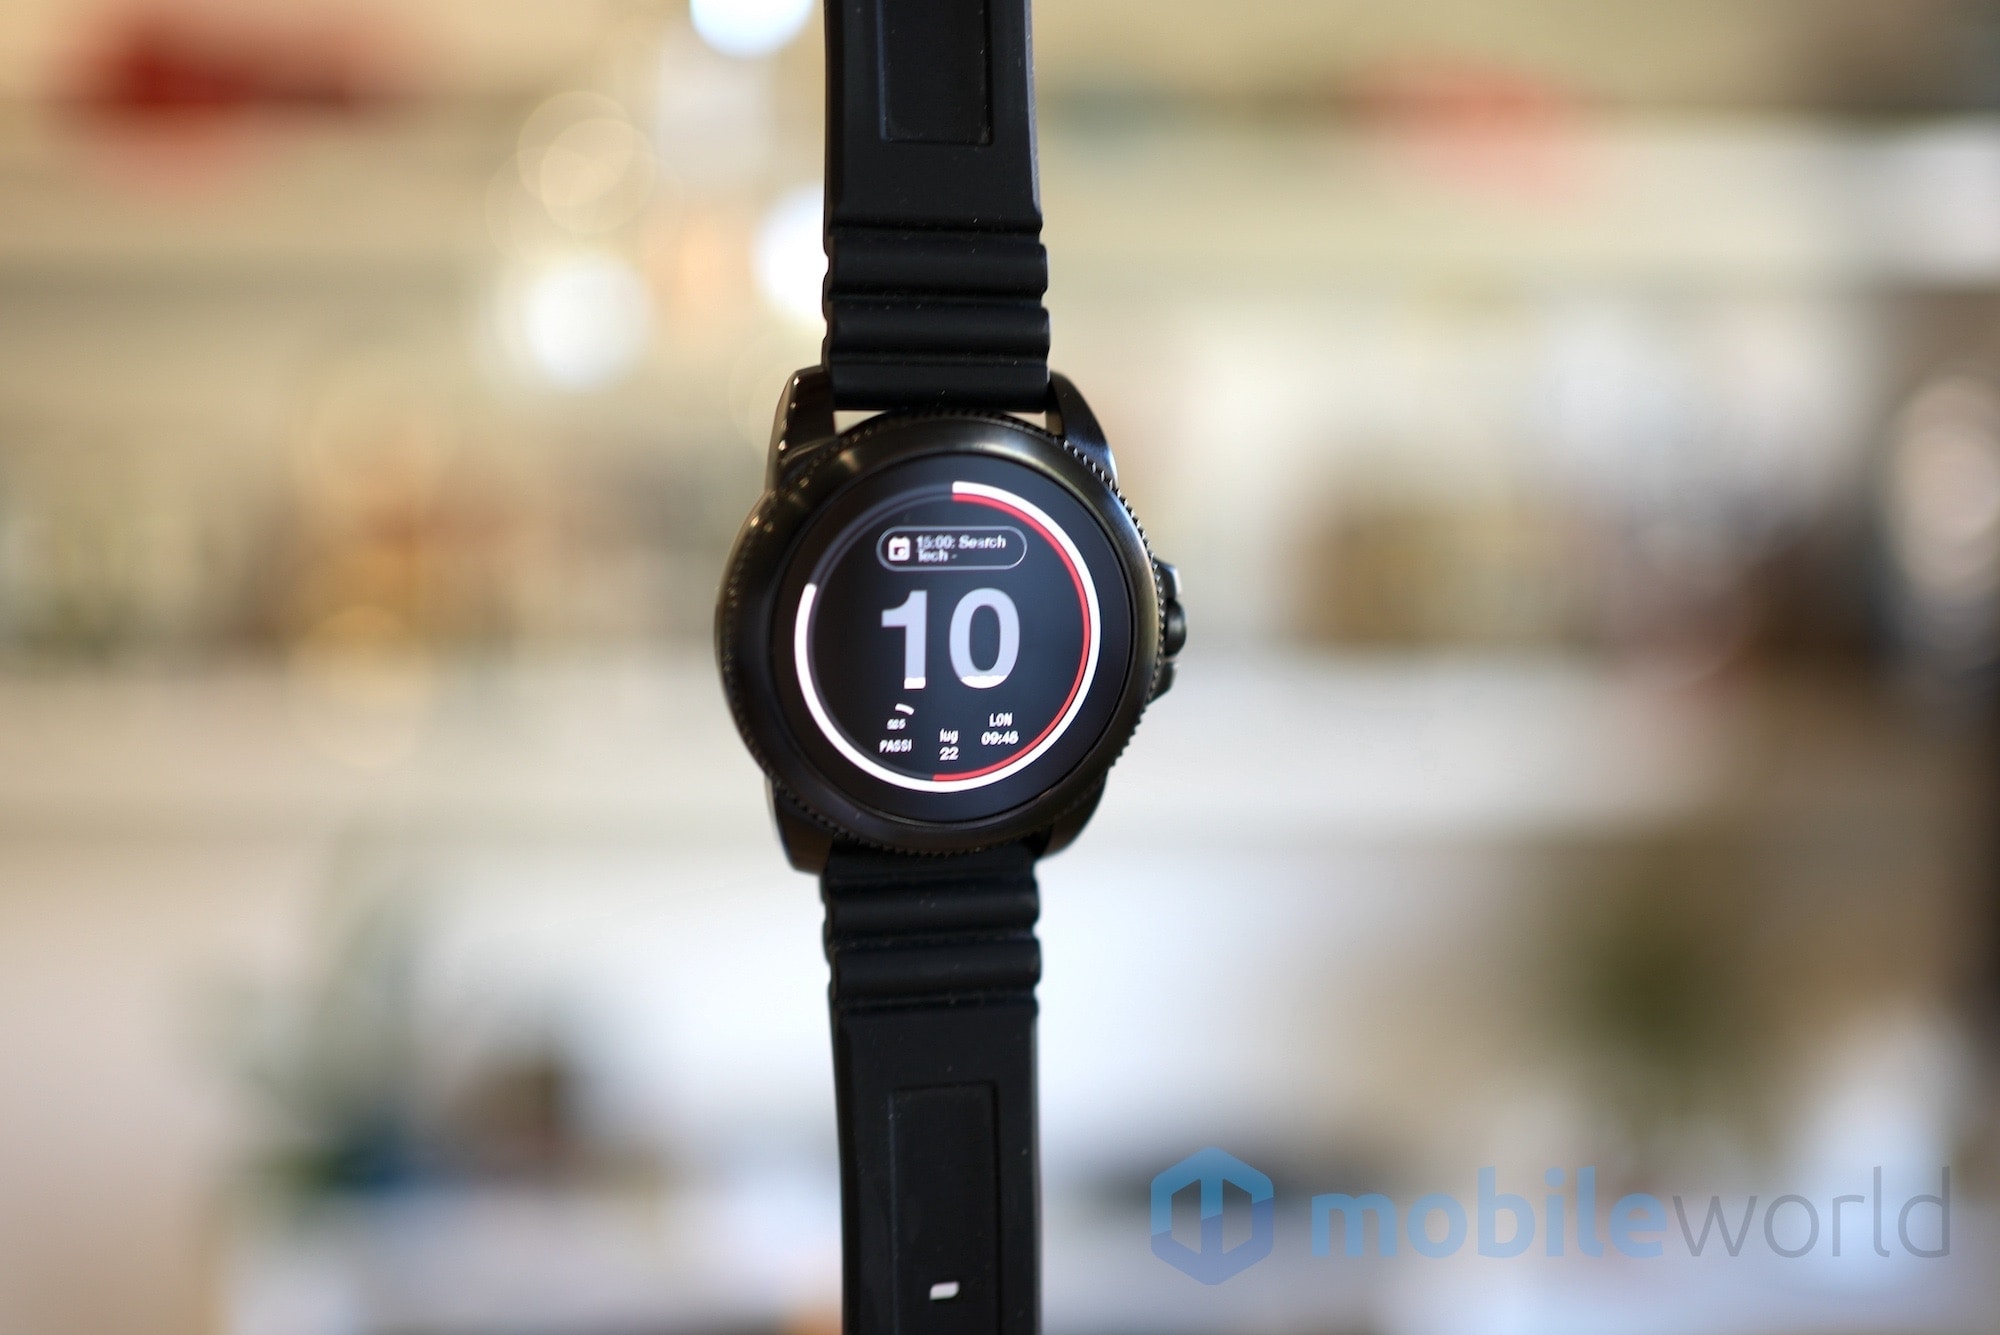 Google Assistant finalmente arriva su smartwatch Fossil con Wear OS 3